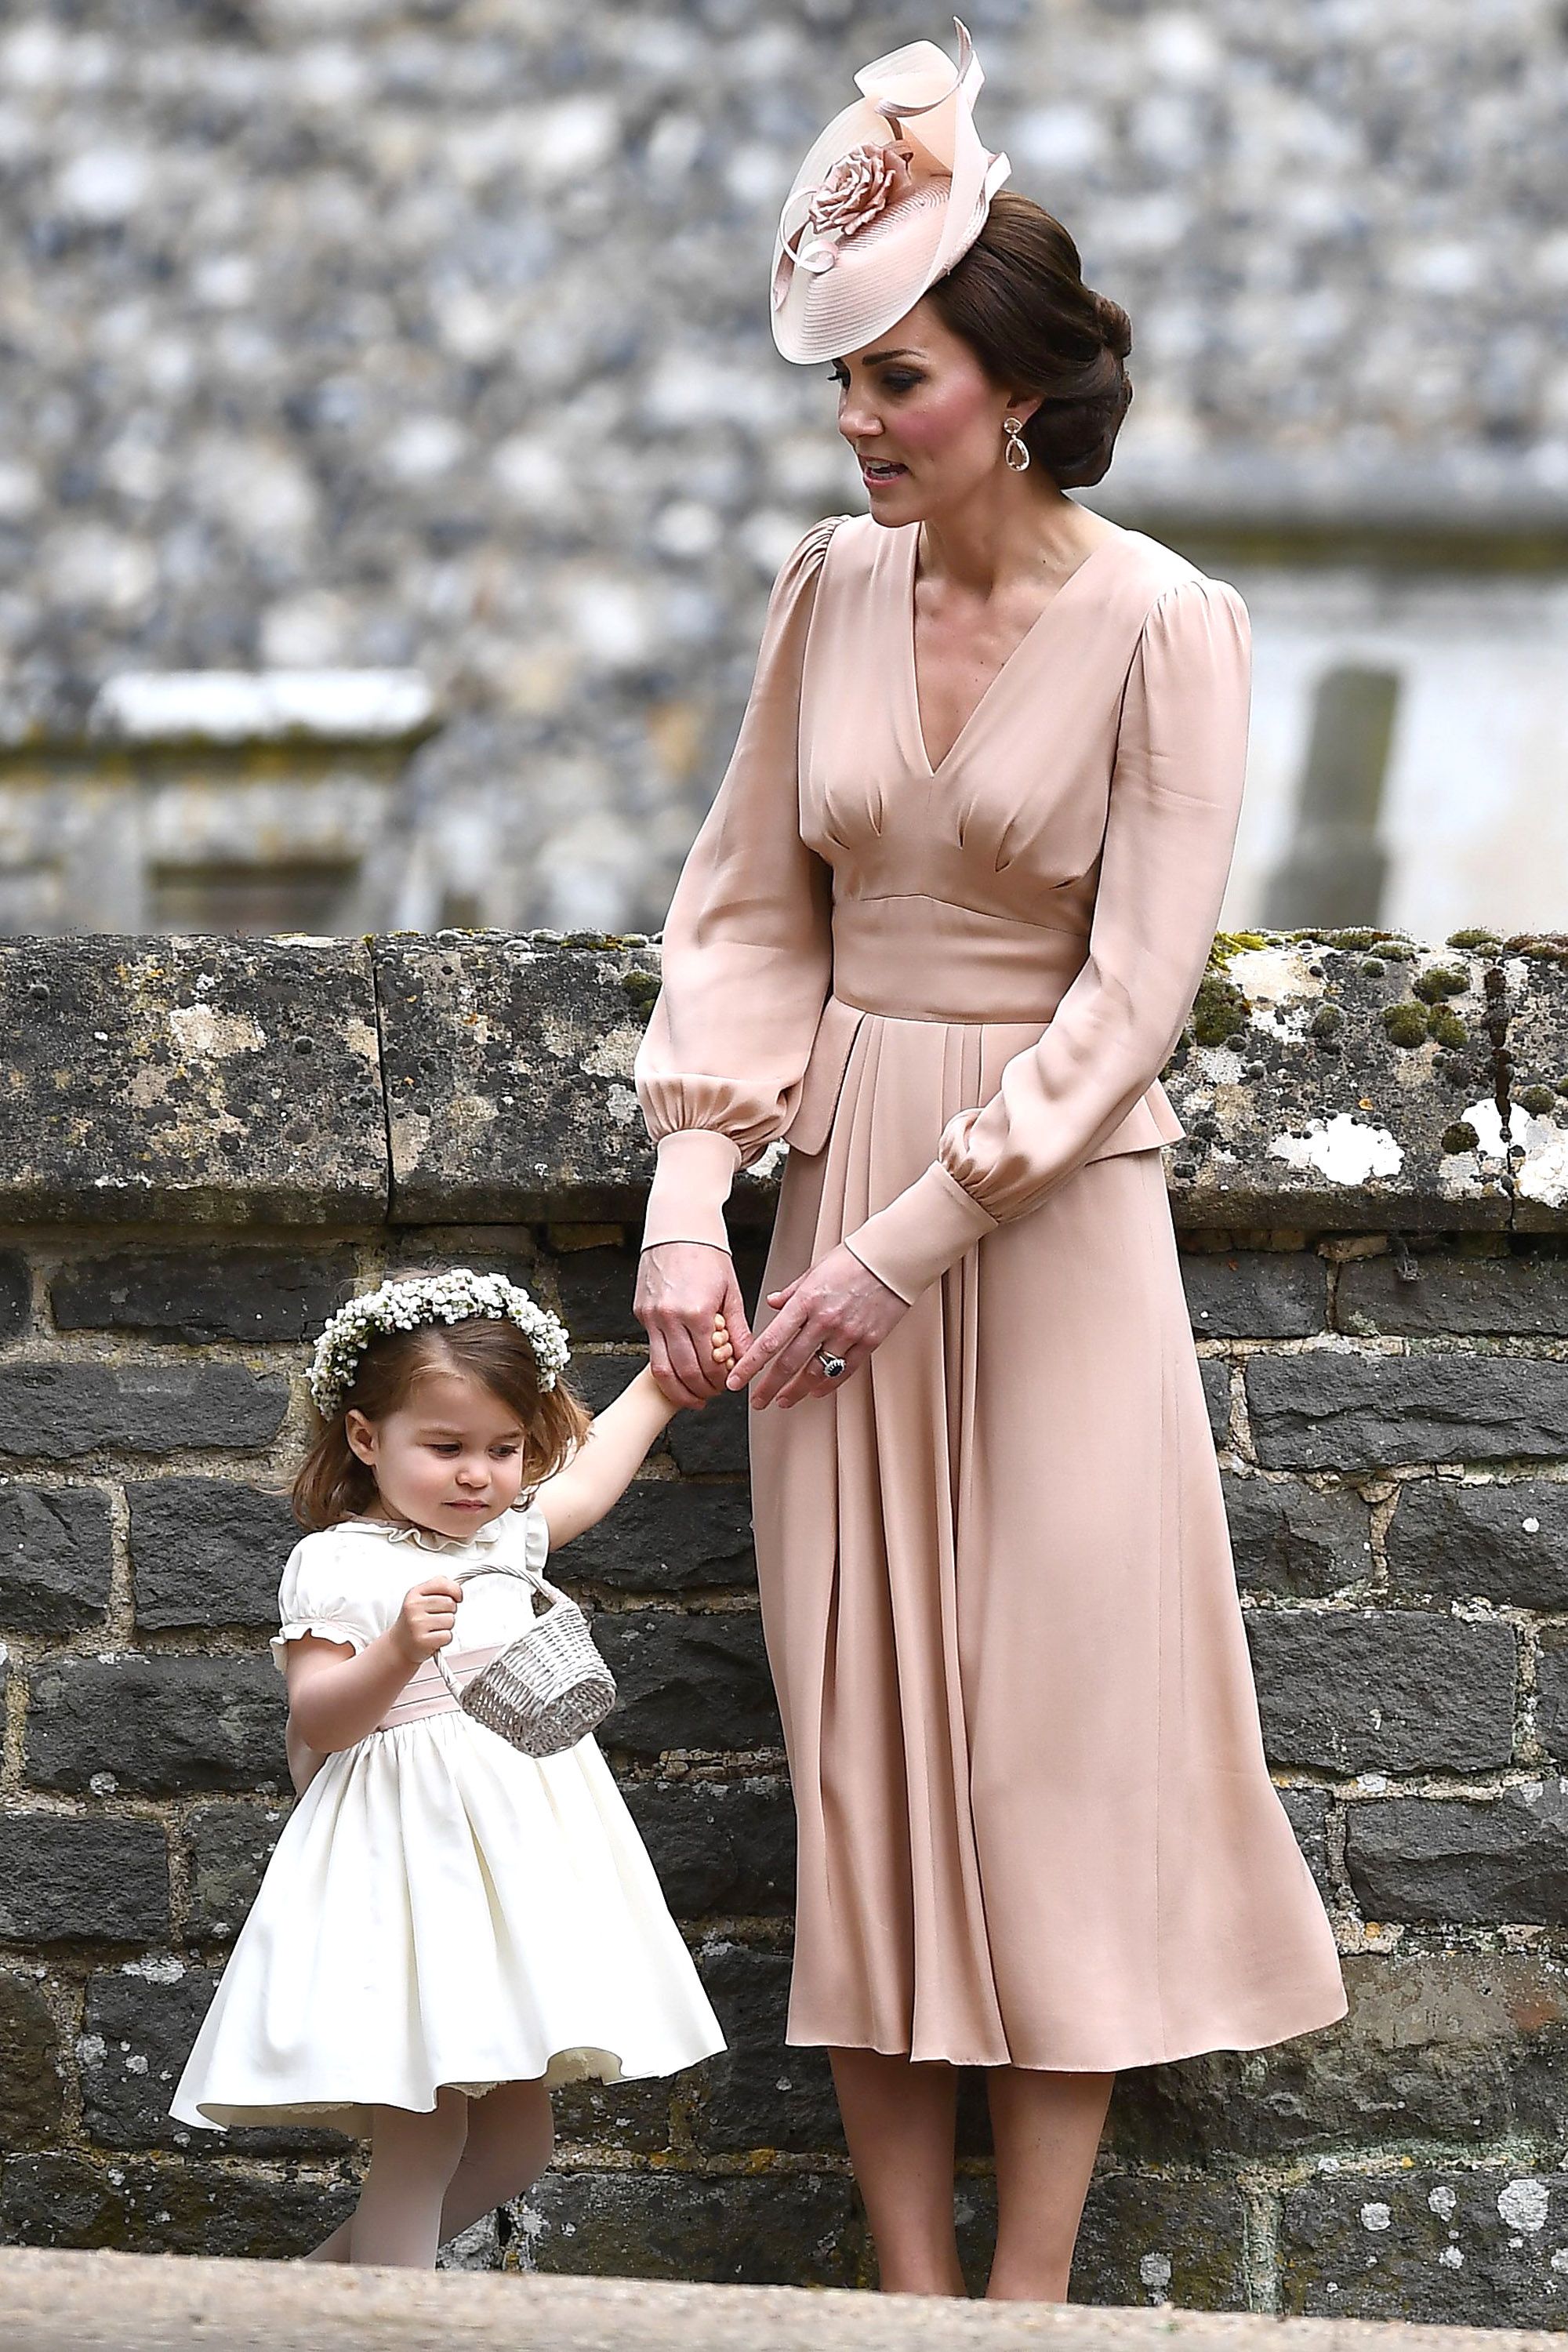 Kate Middleton Wears Pink Alexander McQueen Dress to Pippa Middleton's  Wedding - Kate Middleton's Dress at Pippa's Wedding